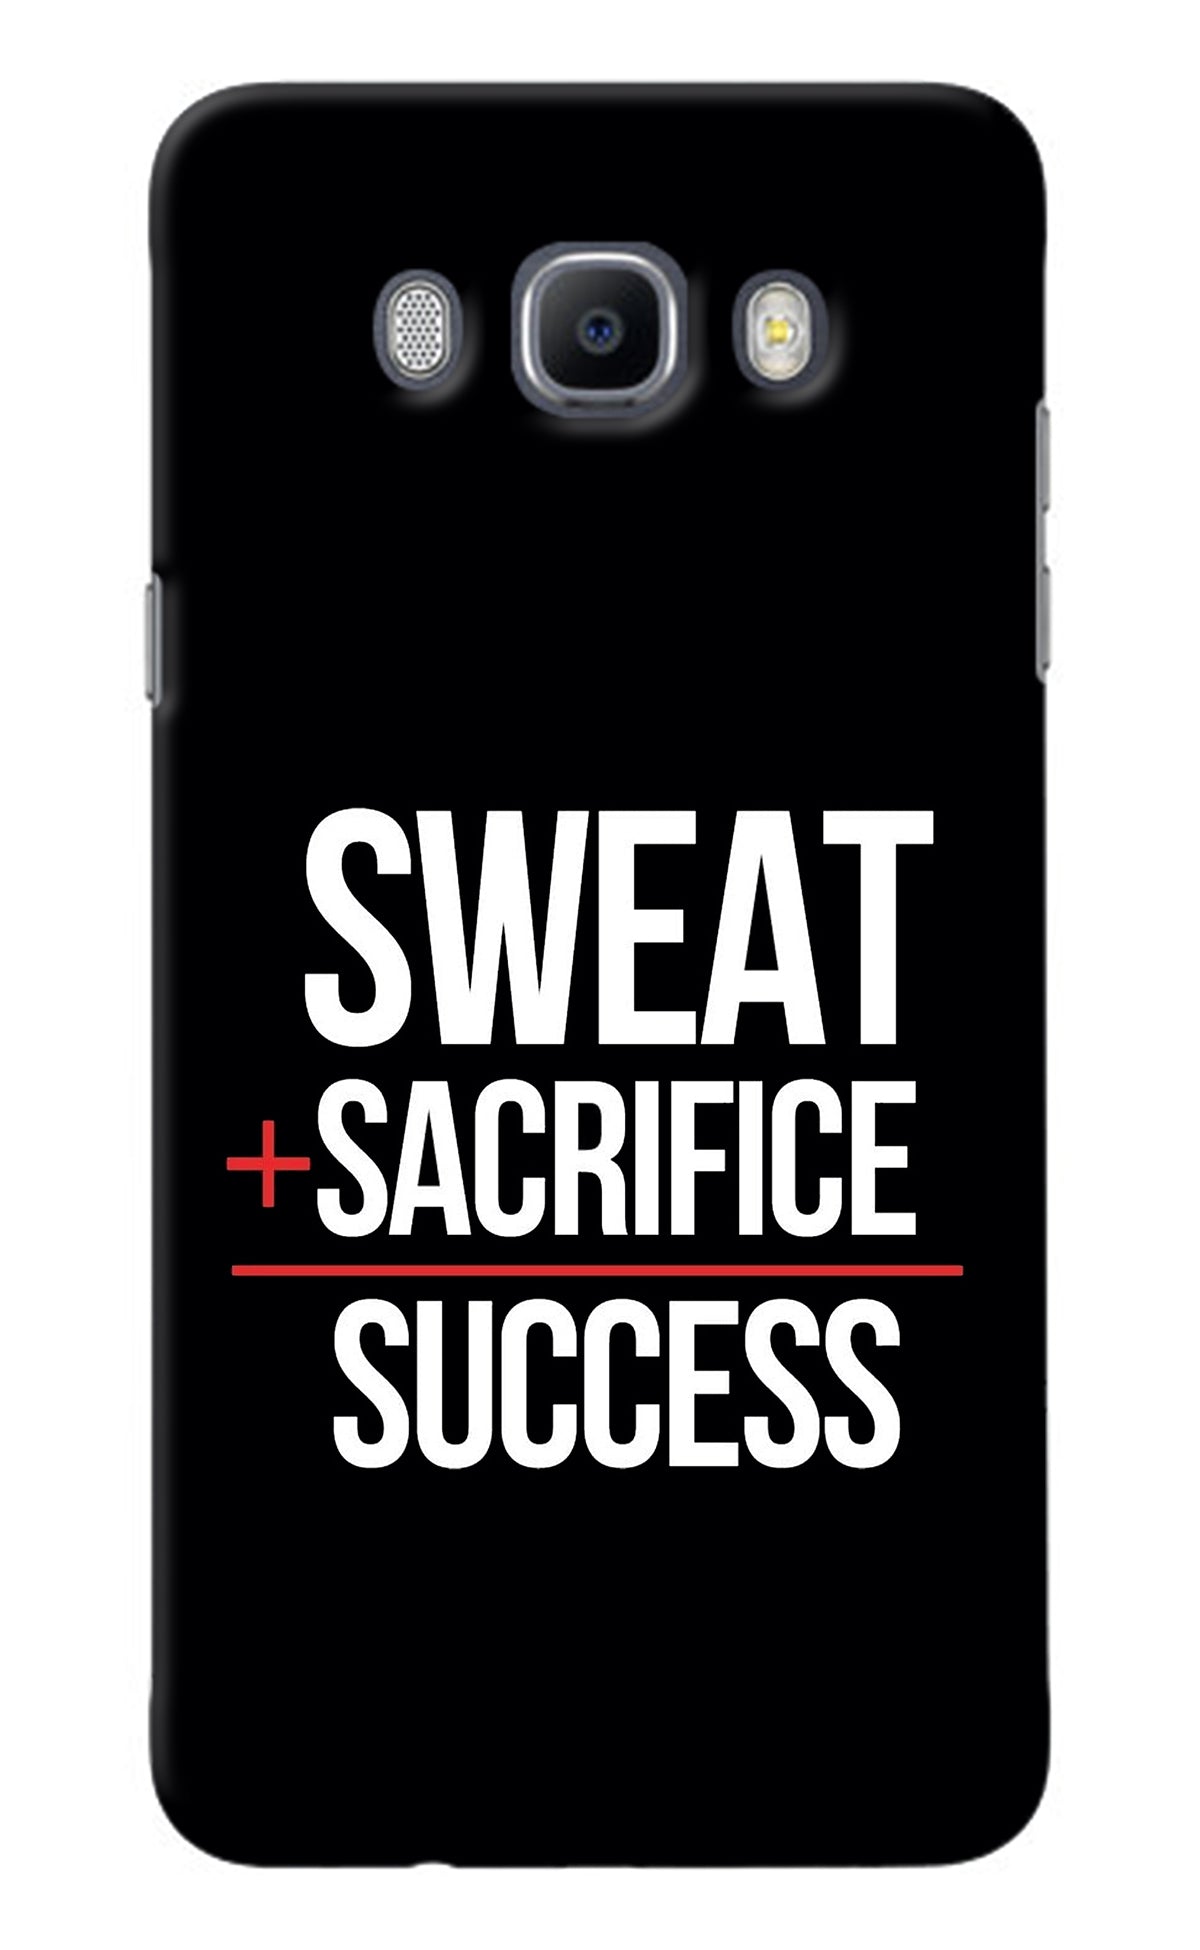 Sweat Sacrifice Success Samsung J7 2016 Back Cover